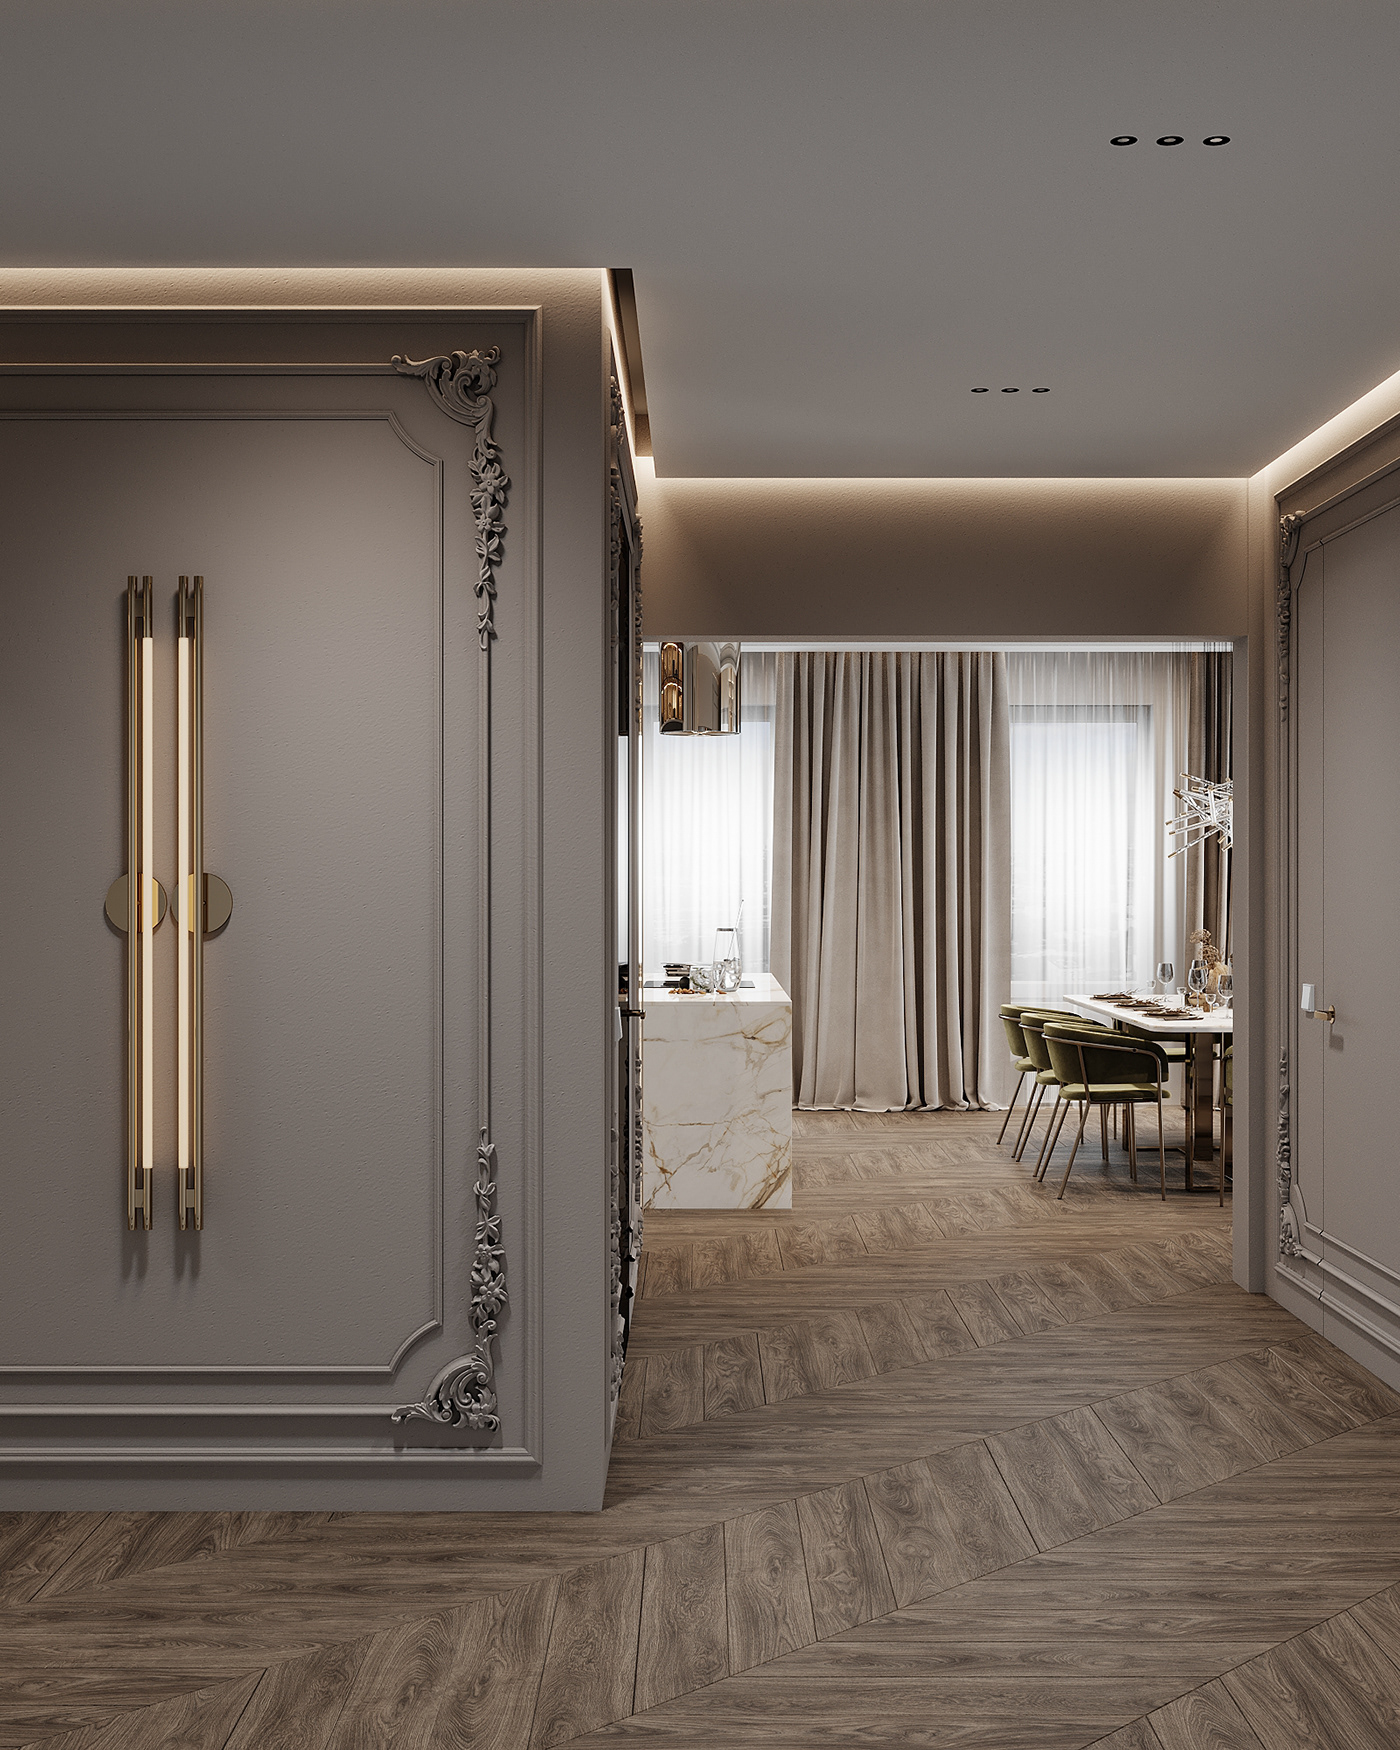 3ds max architecture bathroom bedroom childroom game room interior design  kitchen design Render visualization